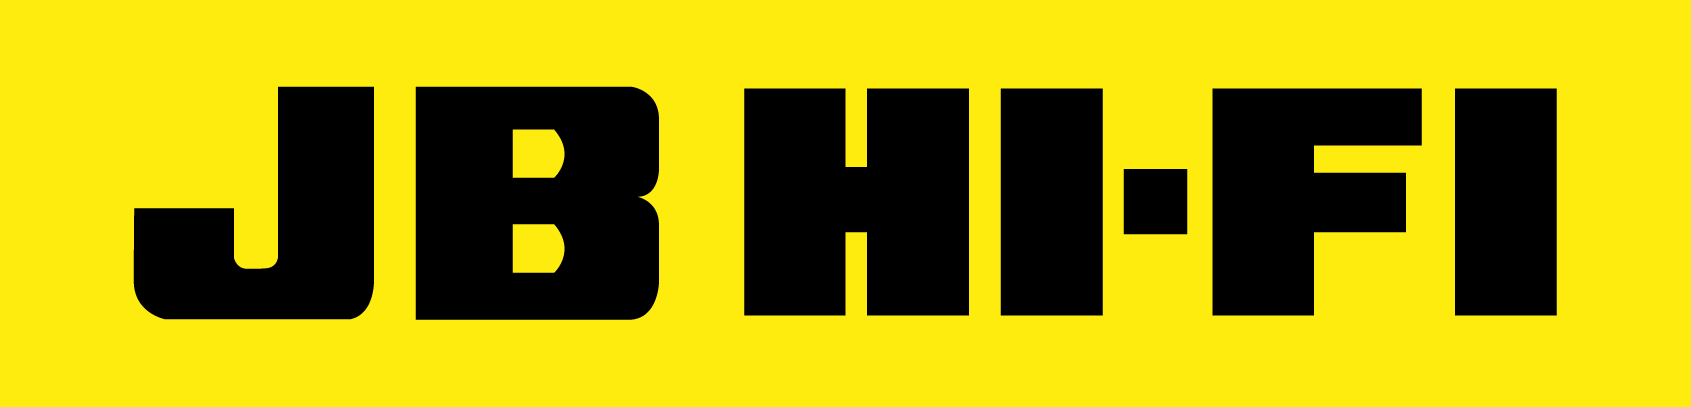 JB_HiFi_Logo-Horizontal-Colour.png__PID:bdc59181-aa78-49d9-b547-2f159abd8e0d